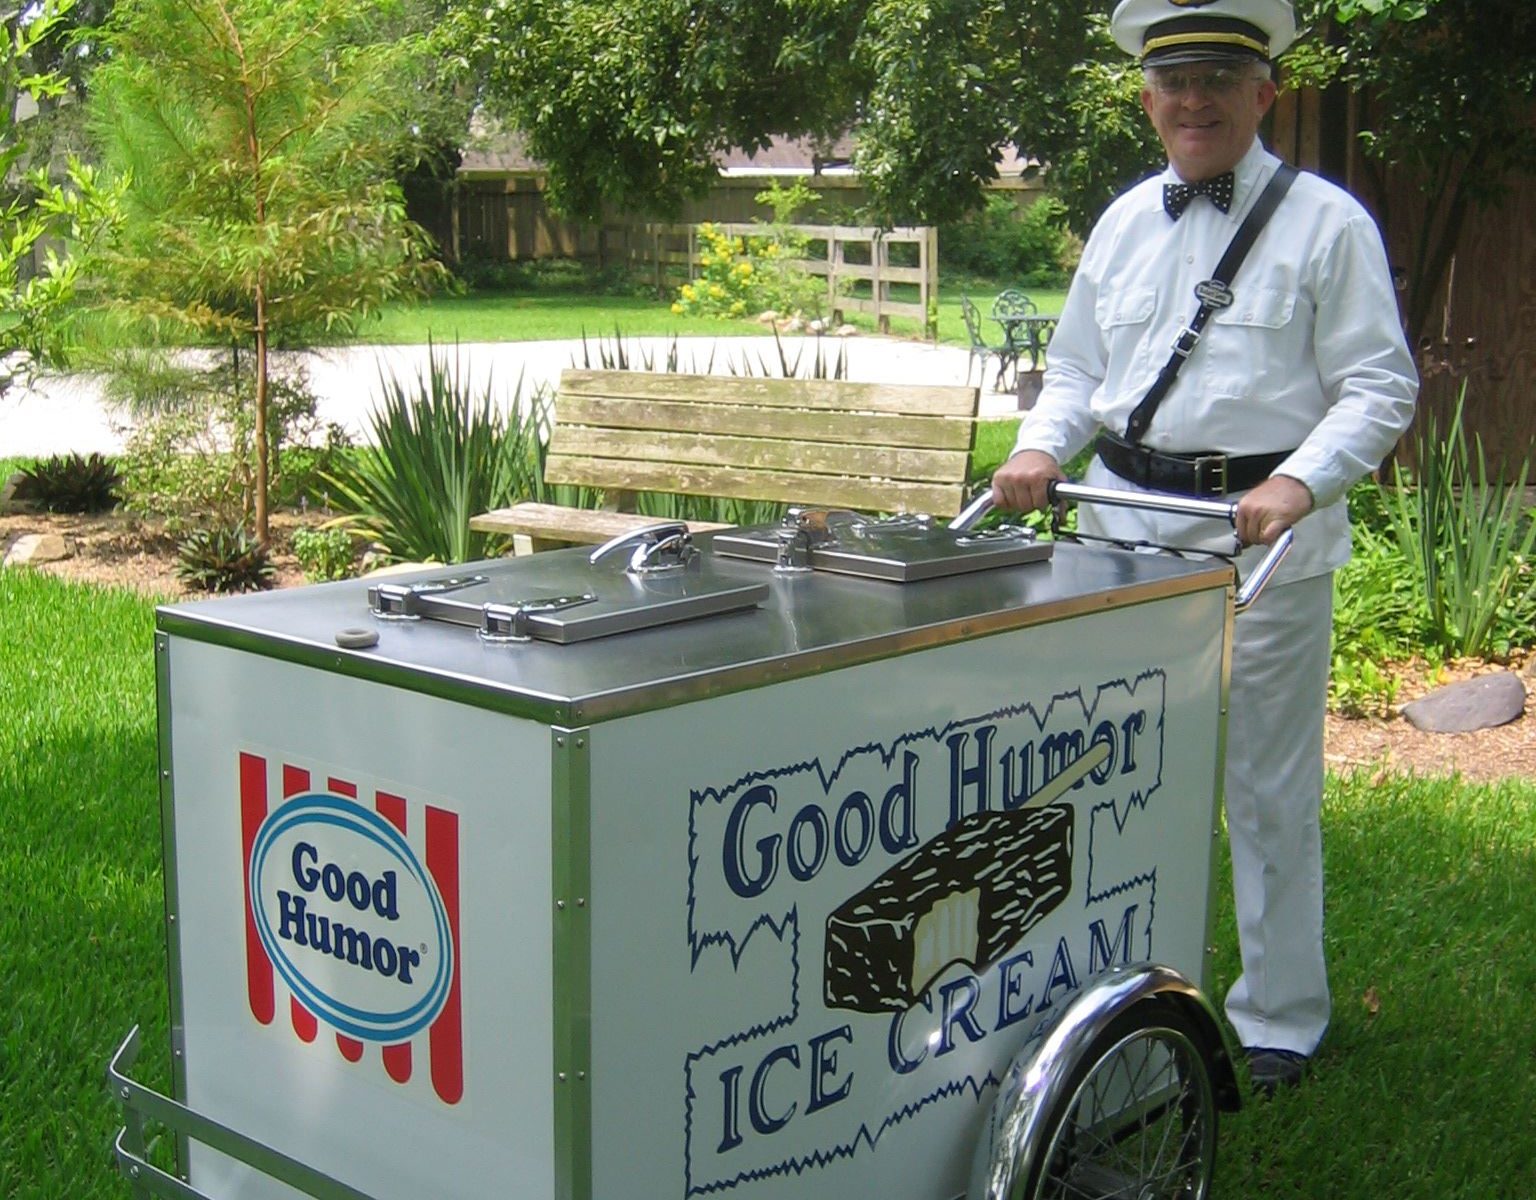 800 buy cart v ddicp ice cream cart